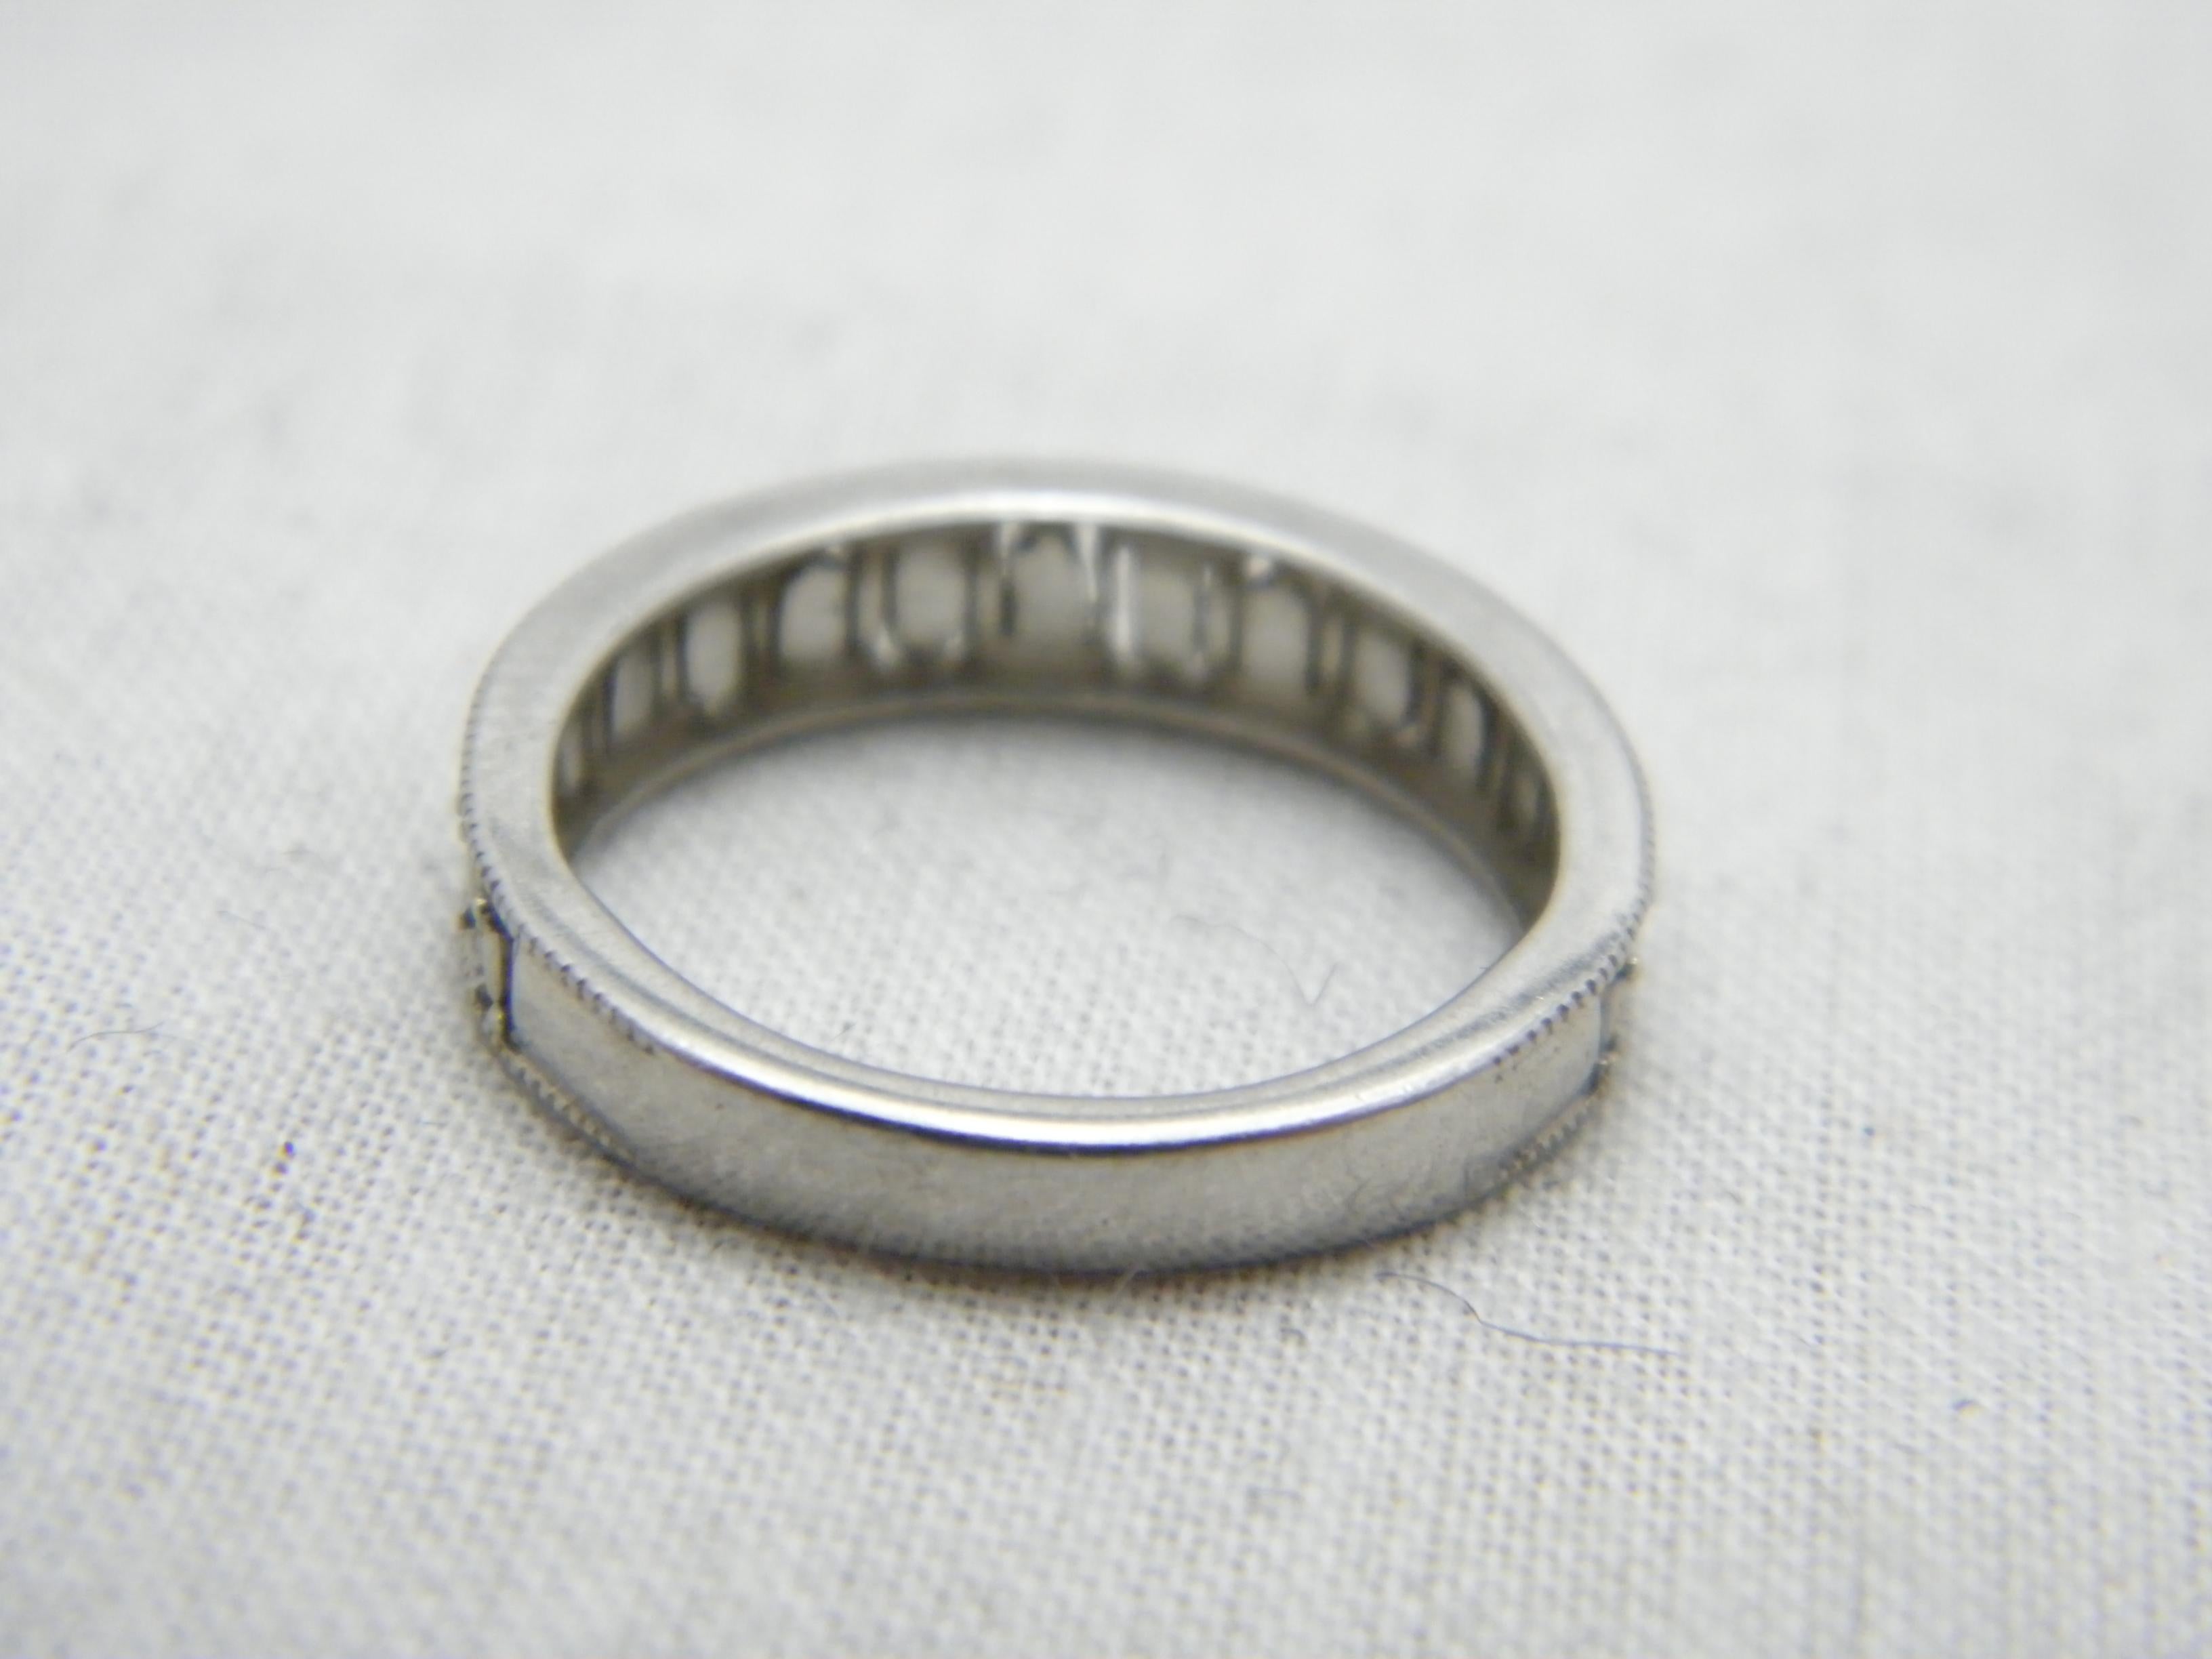 Round Cut Vintage Palladium Diamond Greek Key Ring 950 Purity Band Size J 4.75 Wedding For Sale